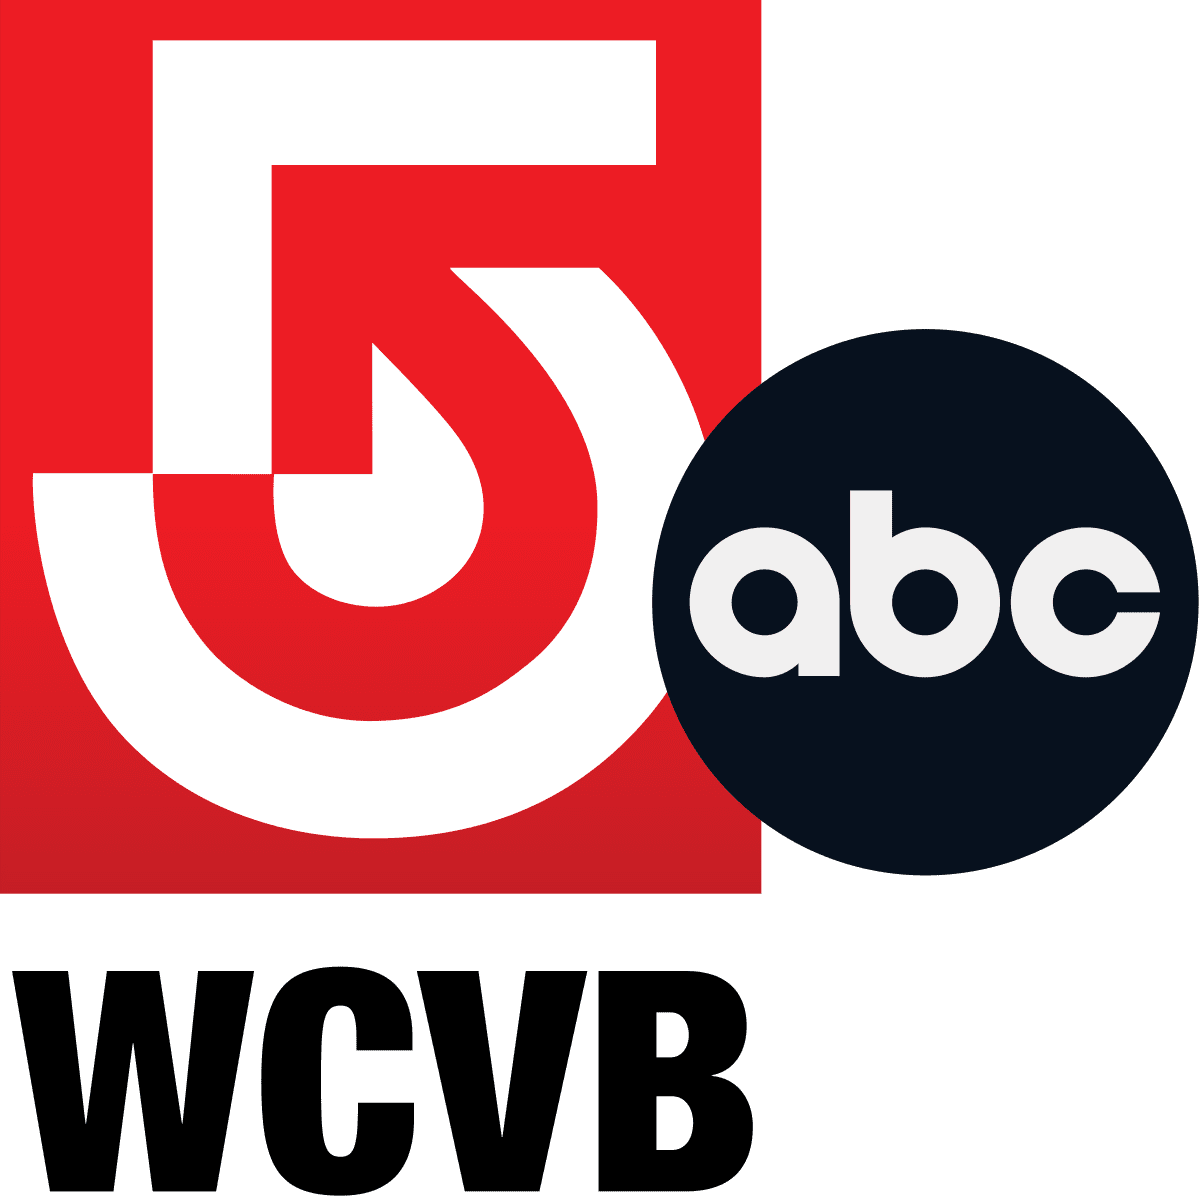 Logo for WCVB TV Chanel 5 in Boston